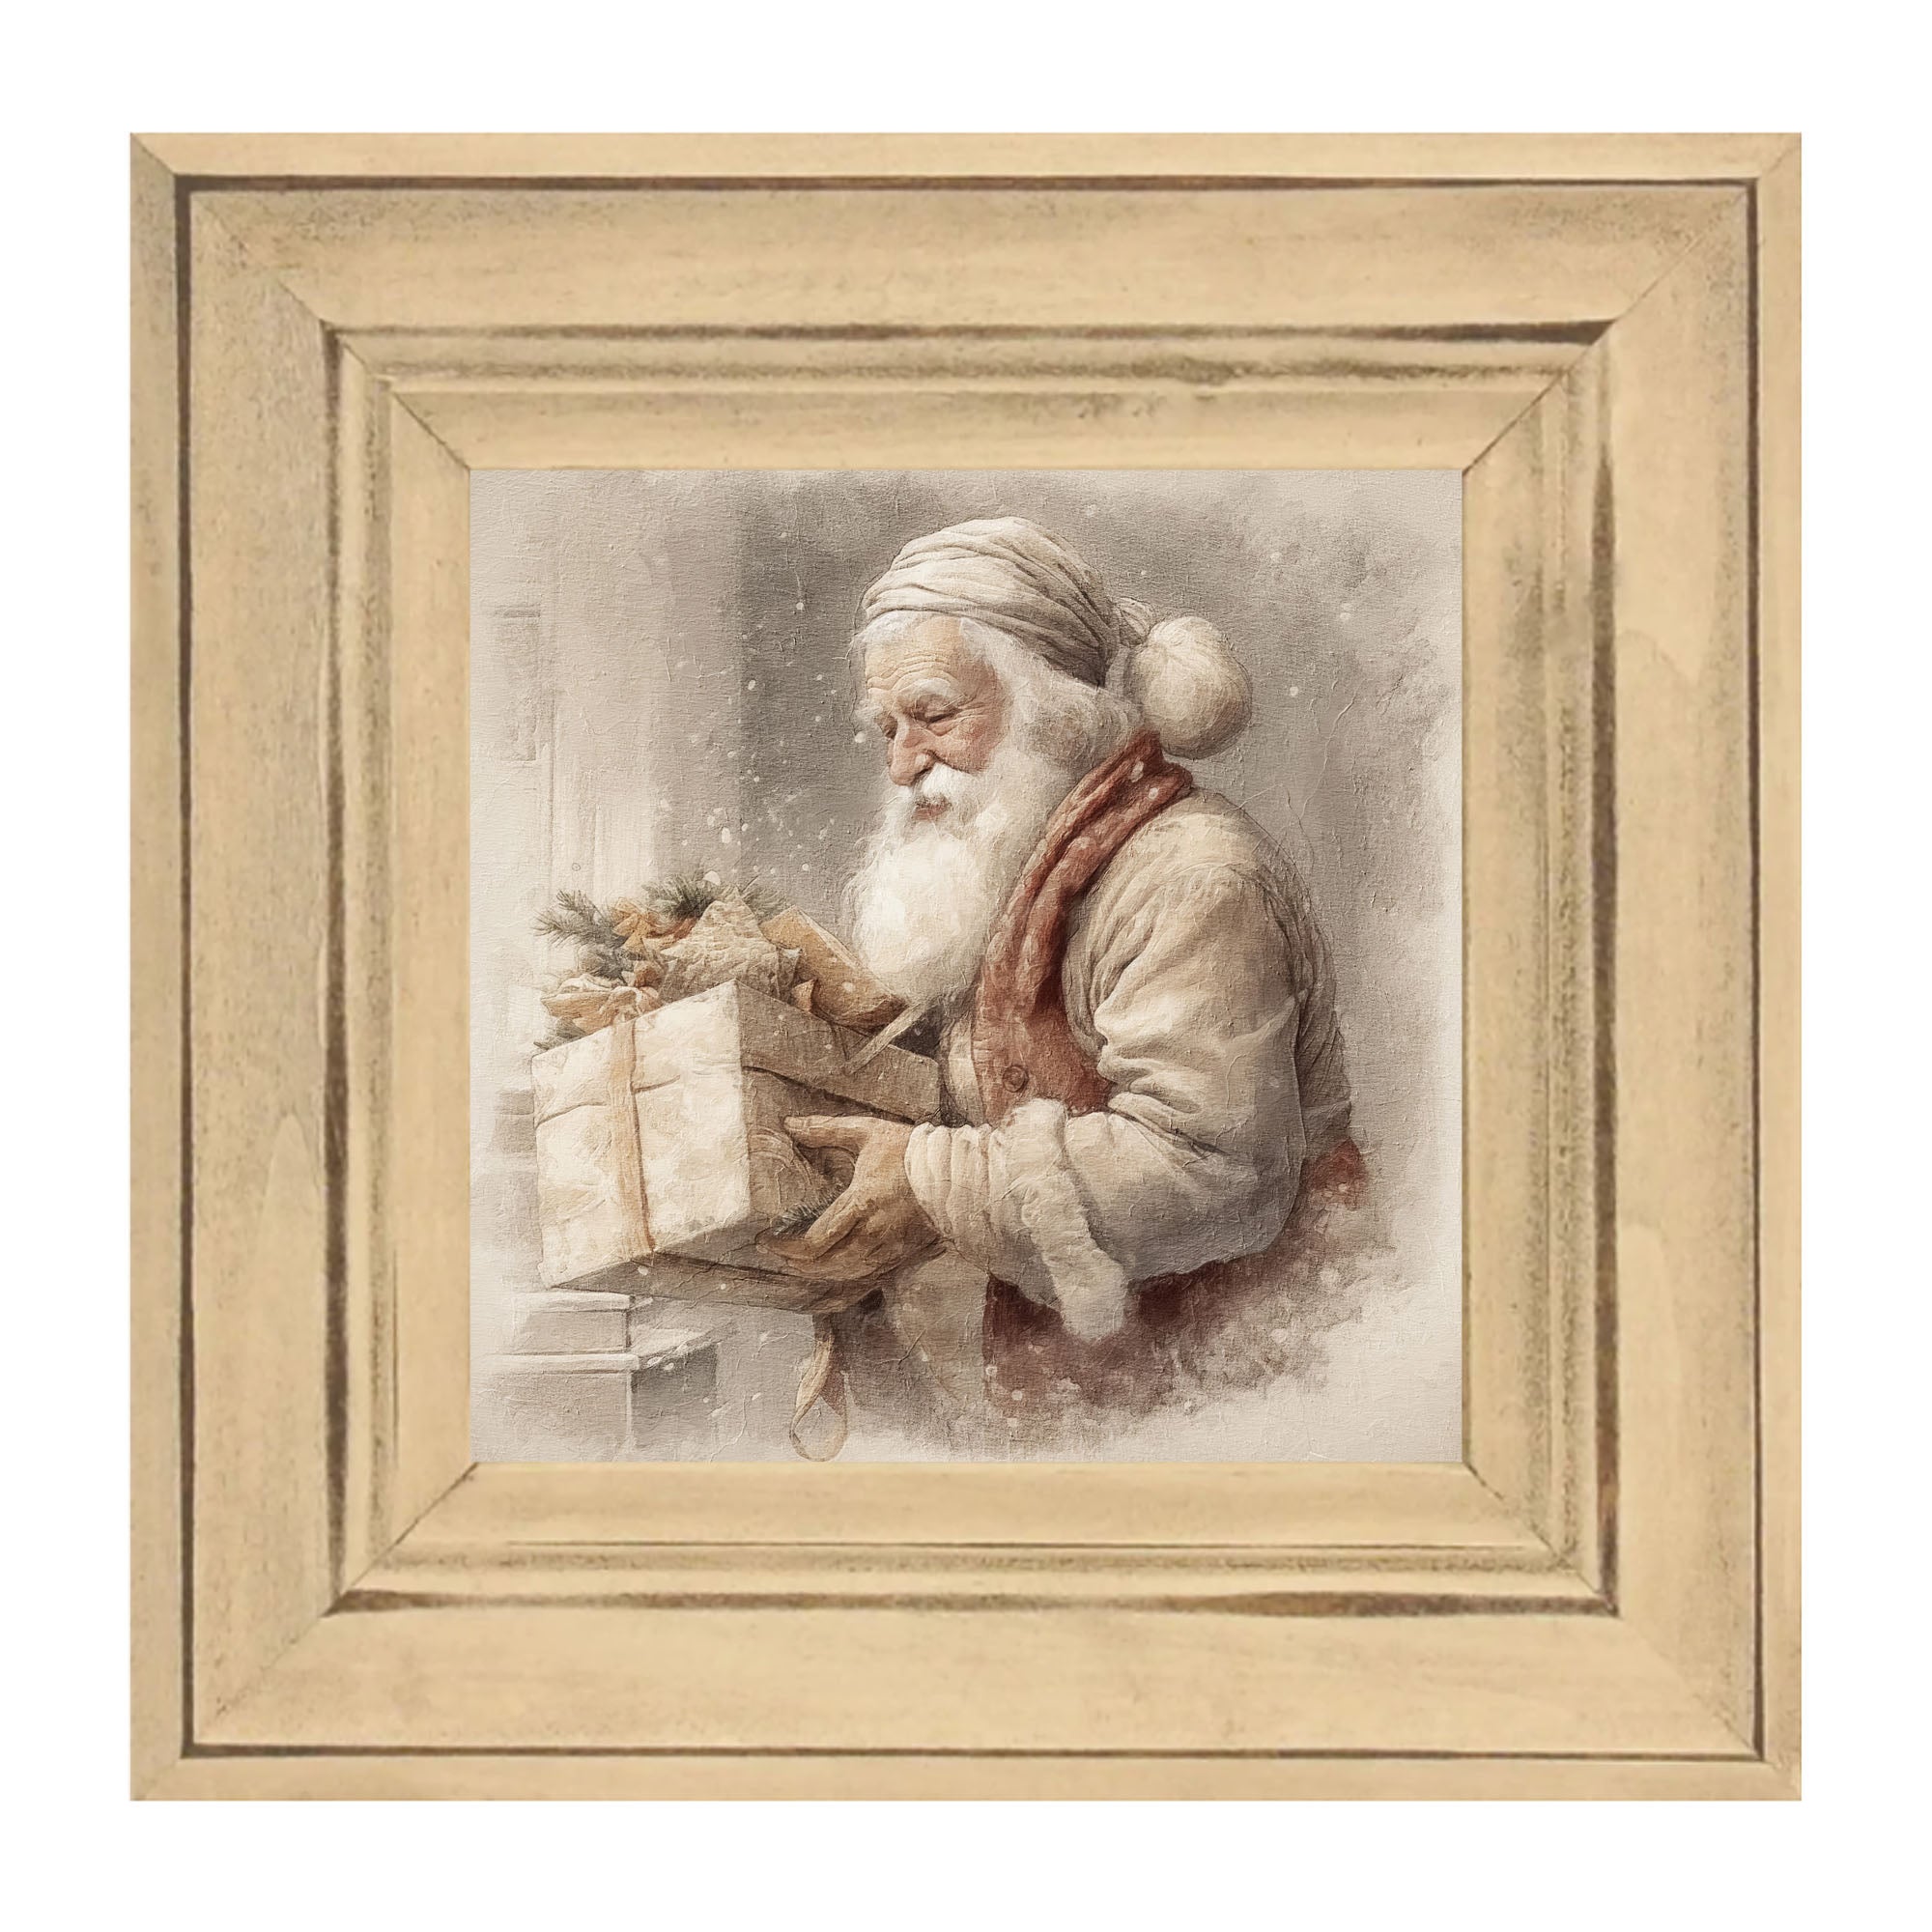 Old world Santa carrying gift